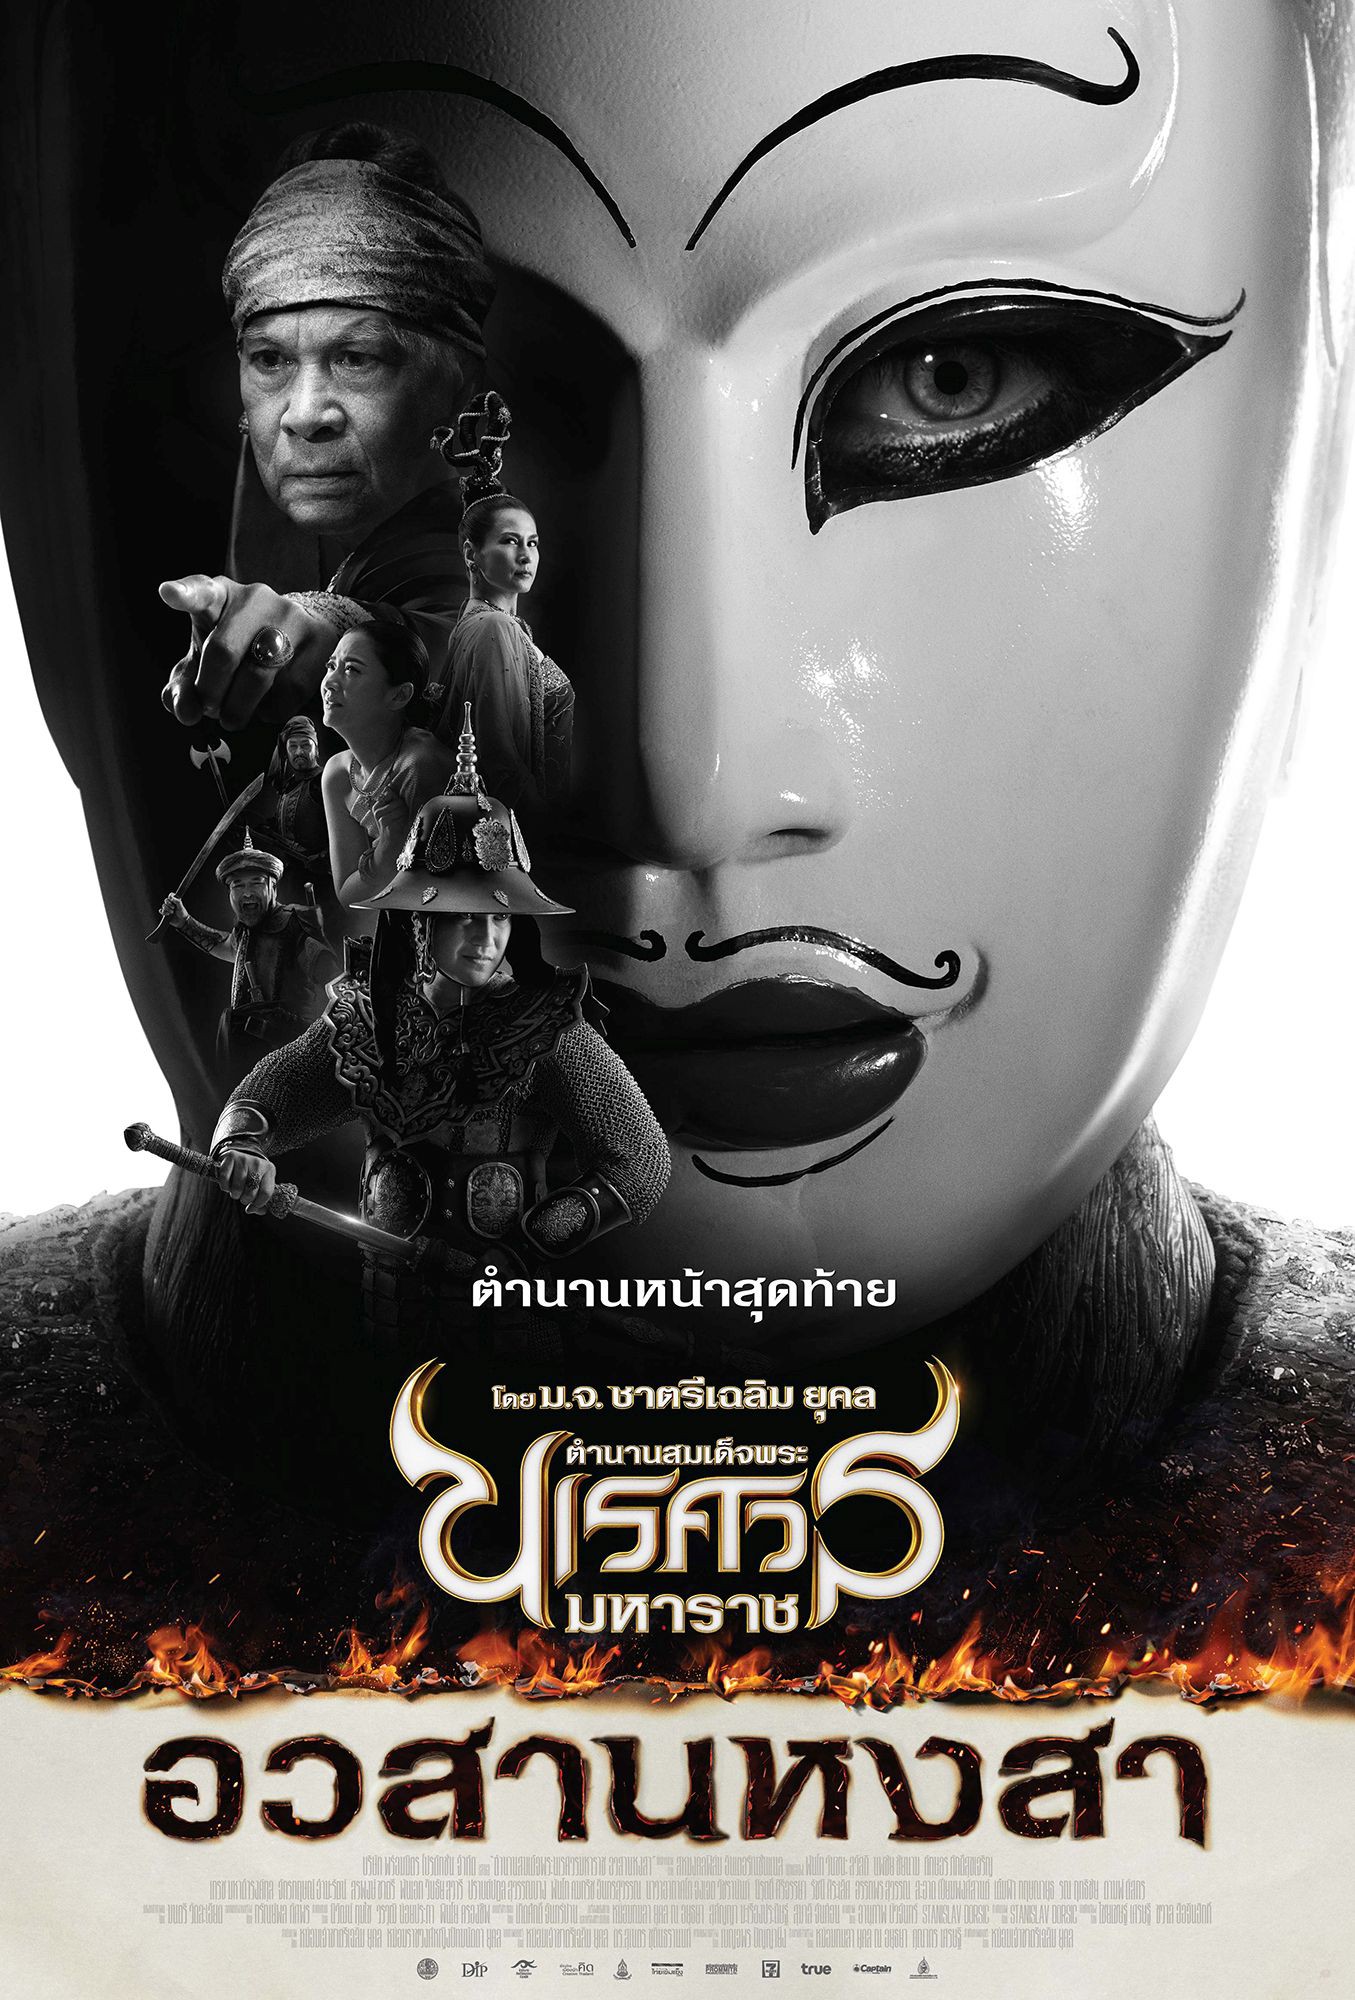 Mega Sized Movie Poster Image for King Naresuan 6 (#12 of 12)